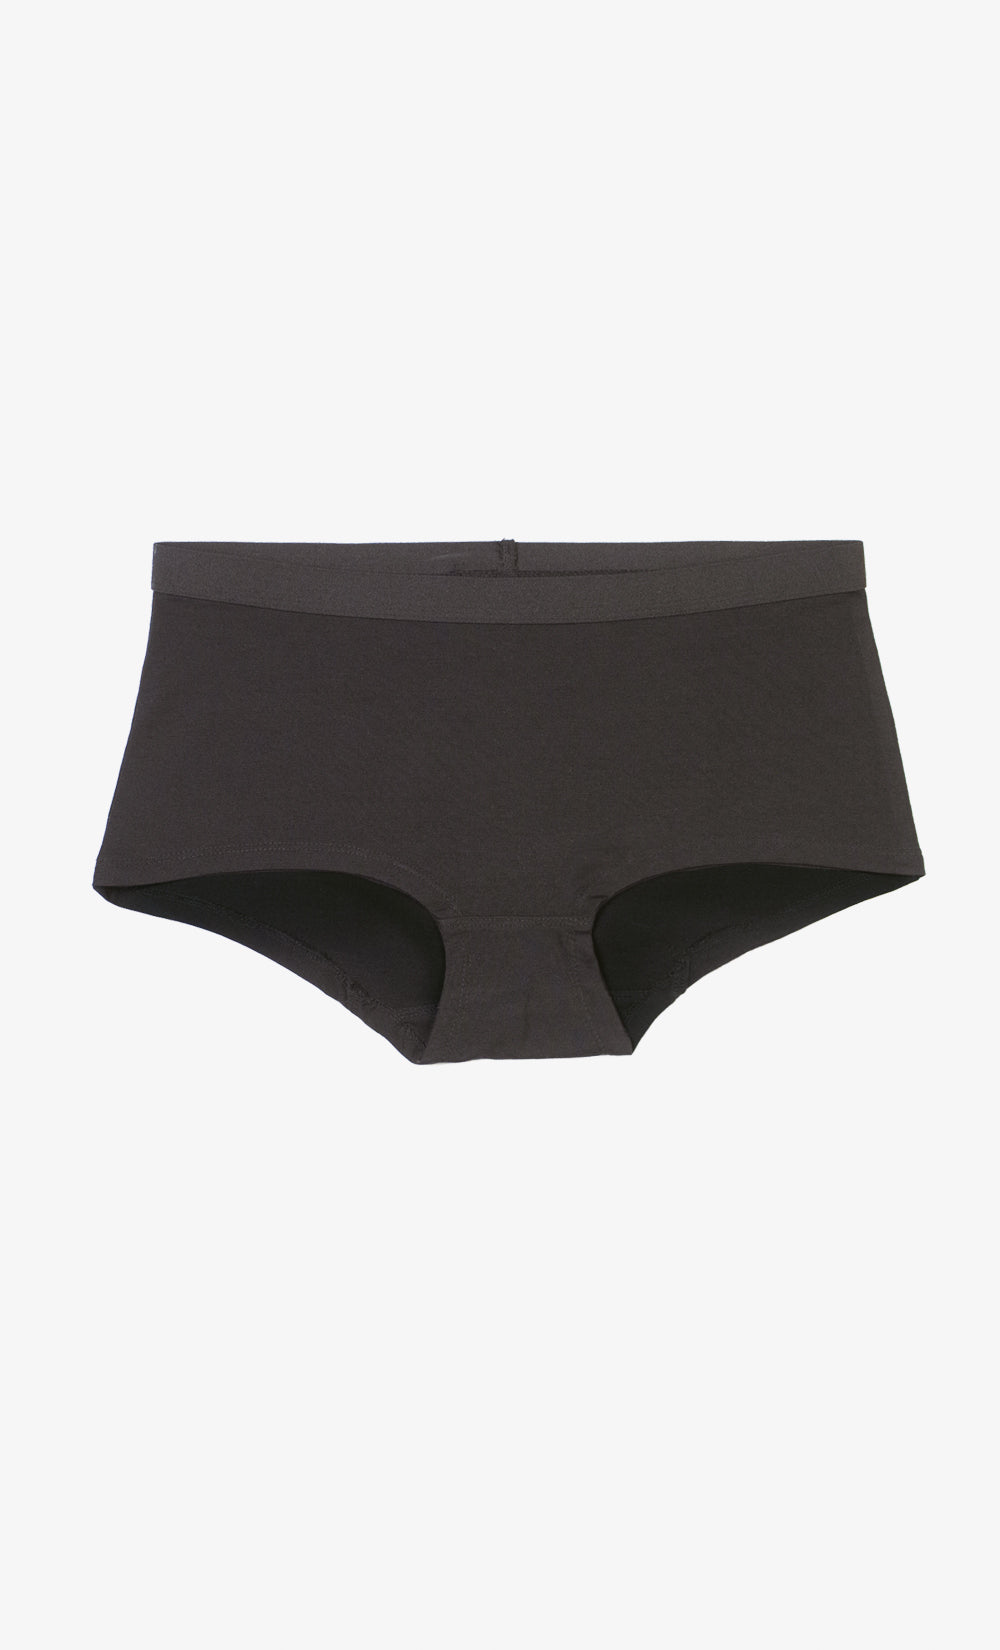 Women's Underwear - Black